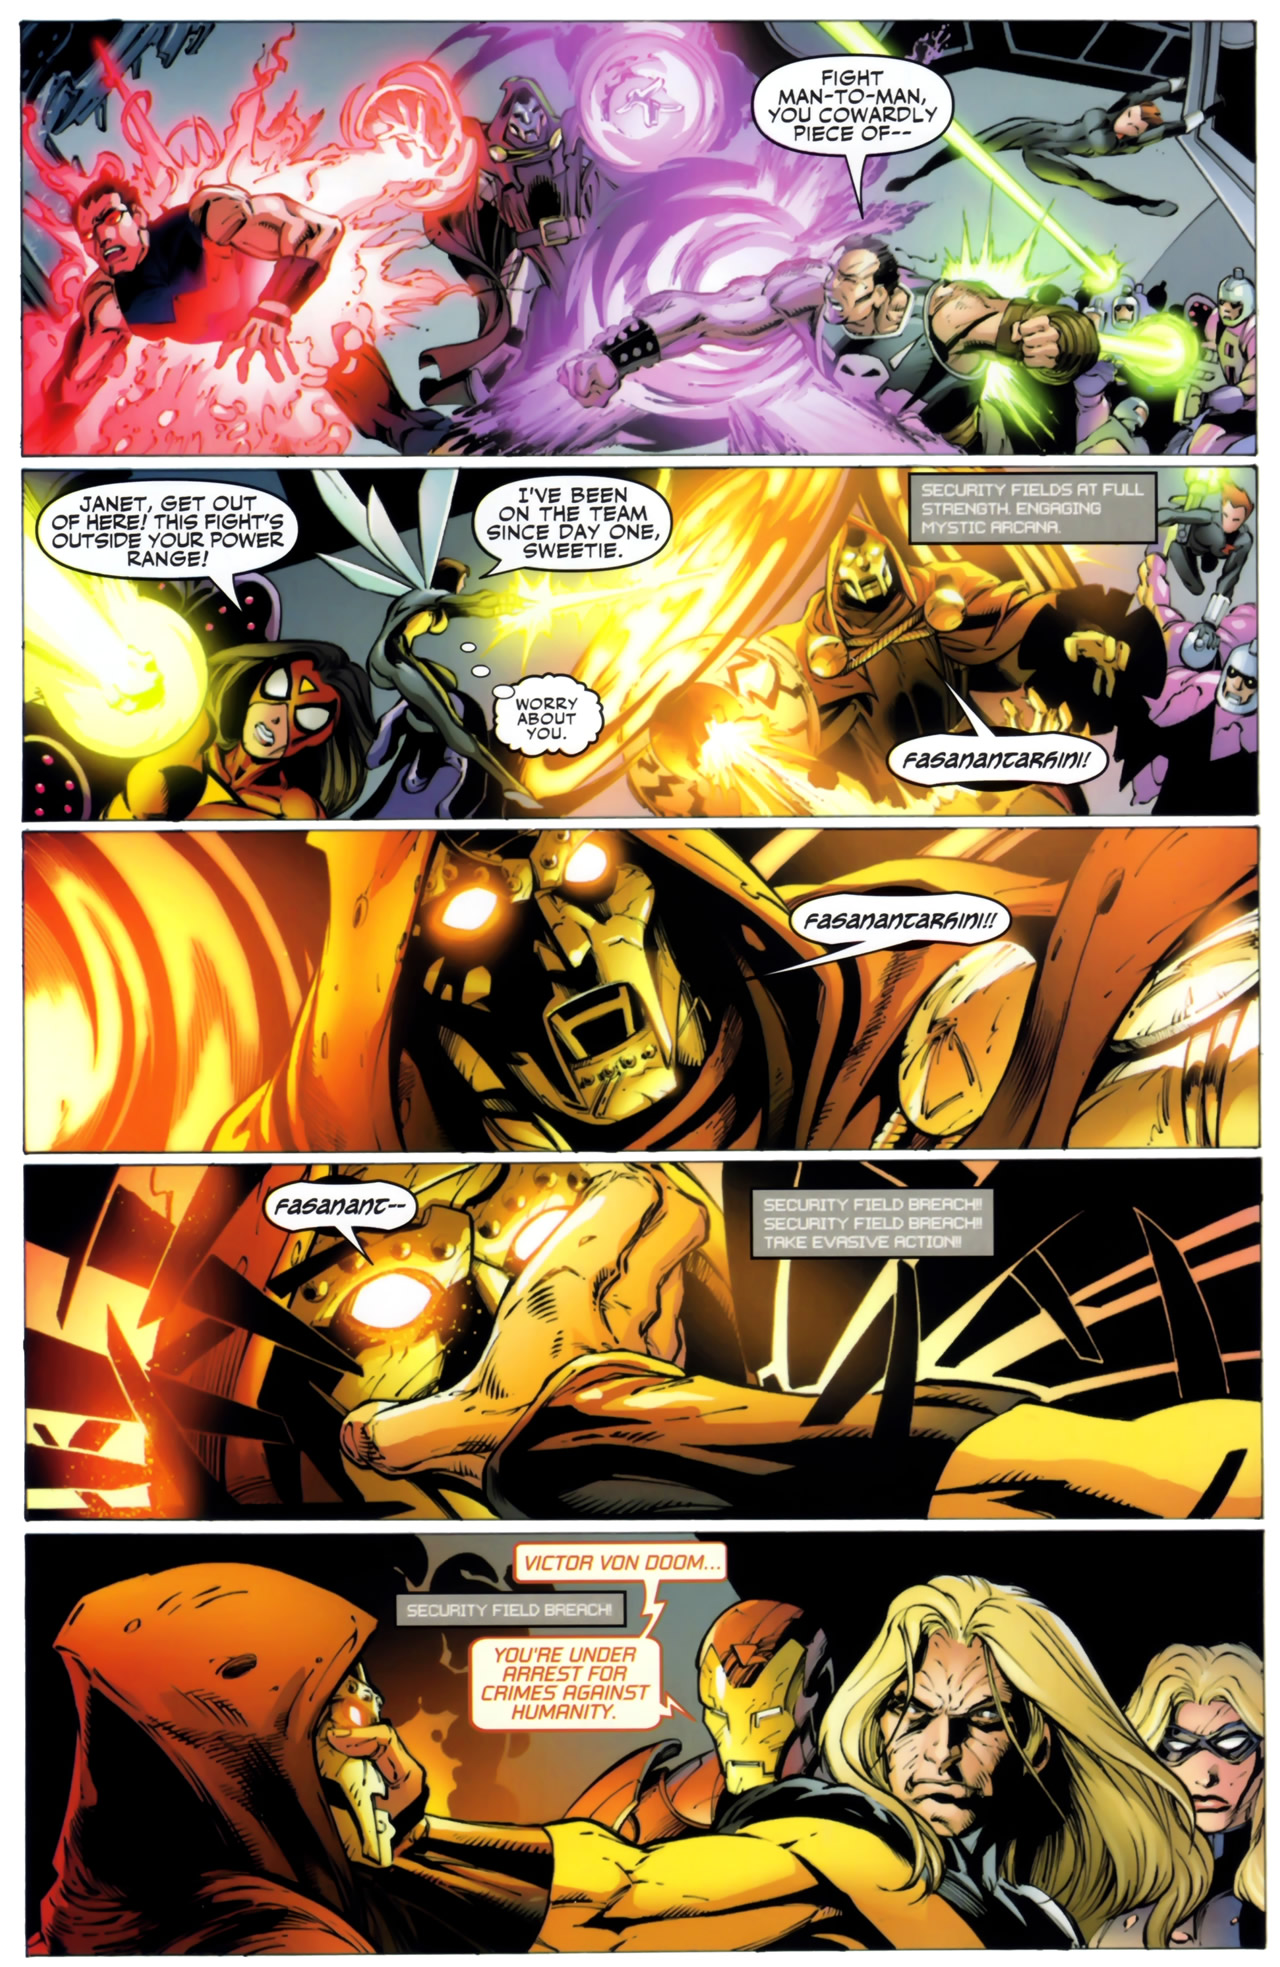 Mighty Avengers 011 The Bastard Megan pg 021